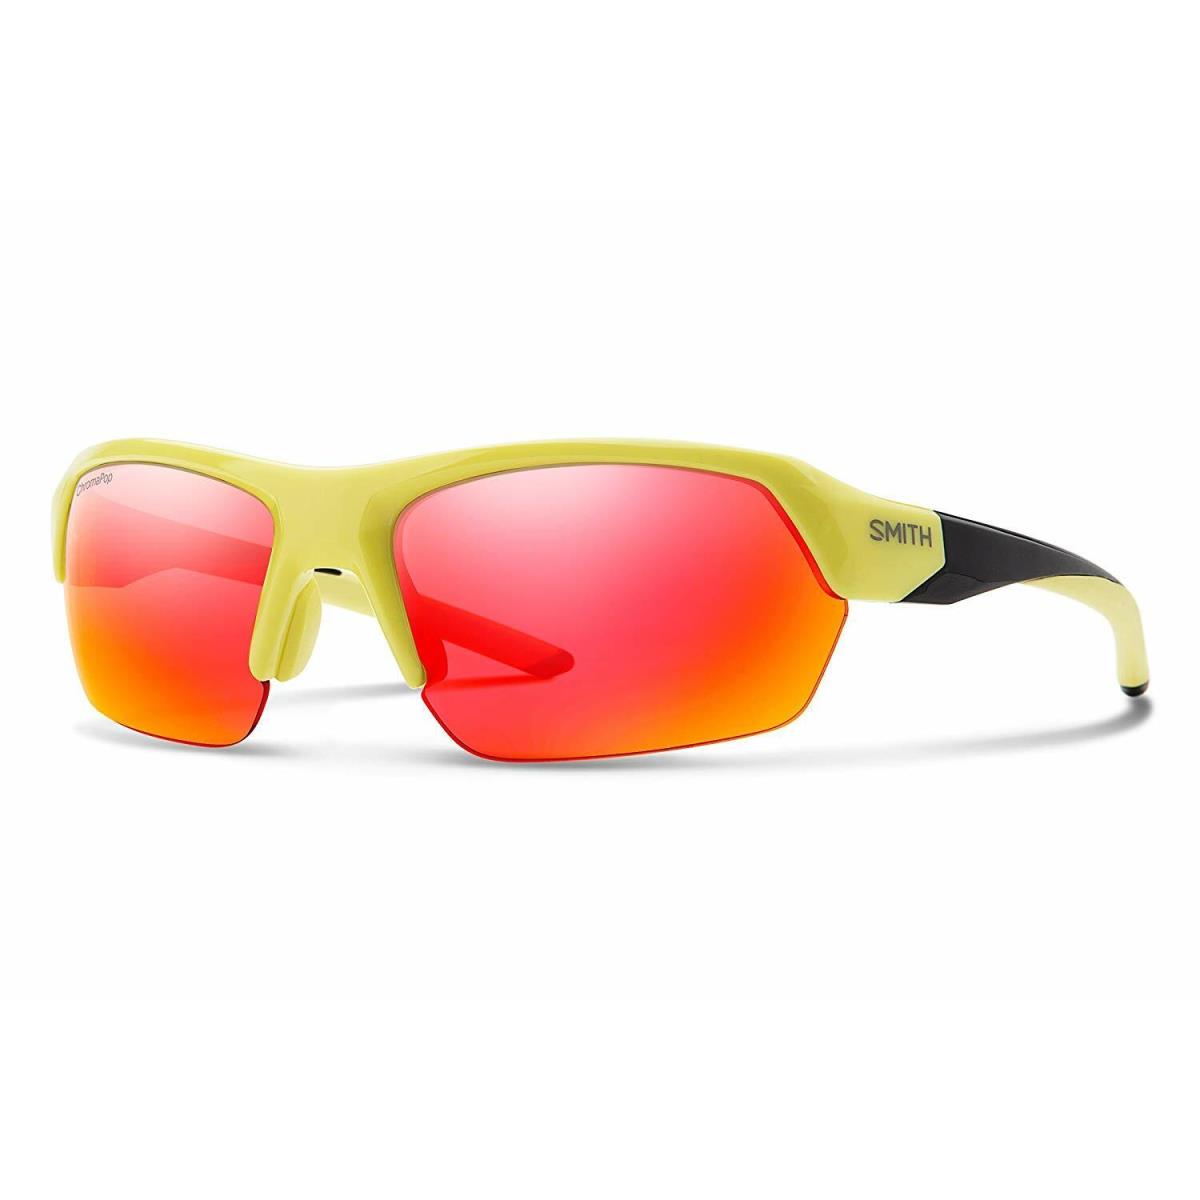 Smith Optics Tempo Sport Sunglasses Kit W/extra Lens - Chromapop - Multicolor Frame